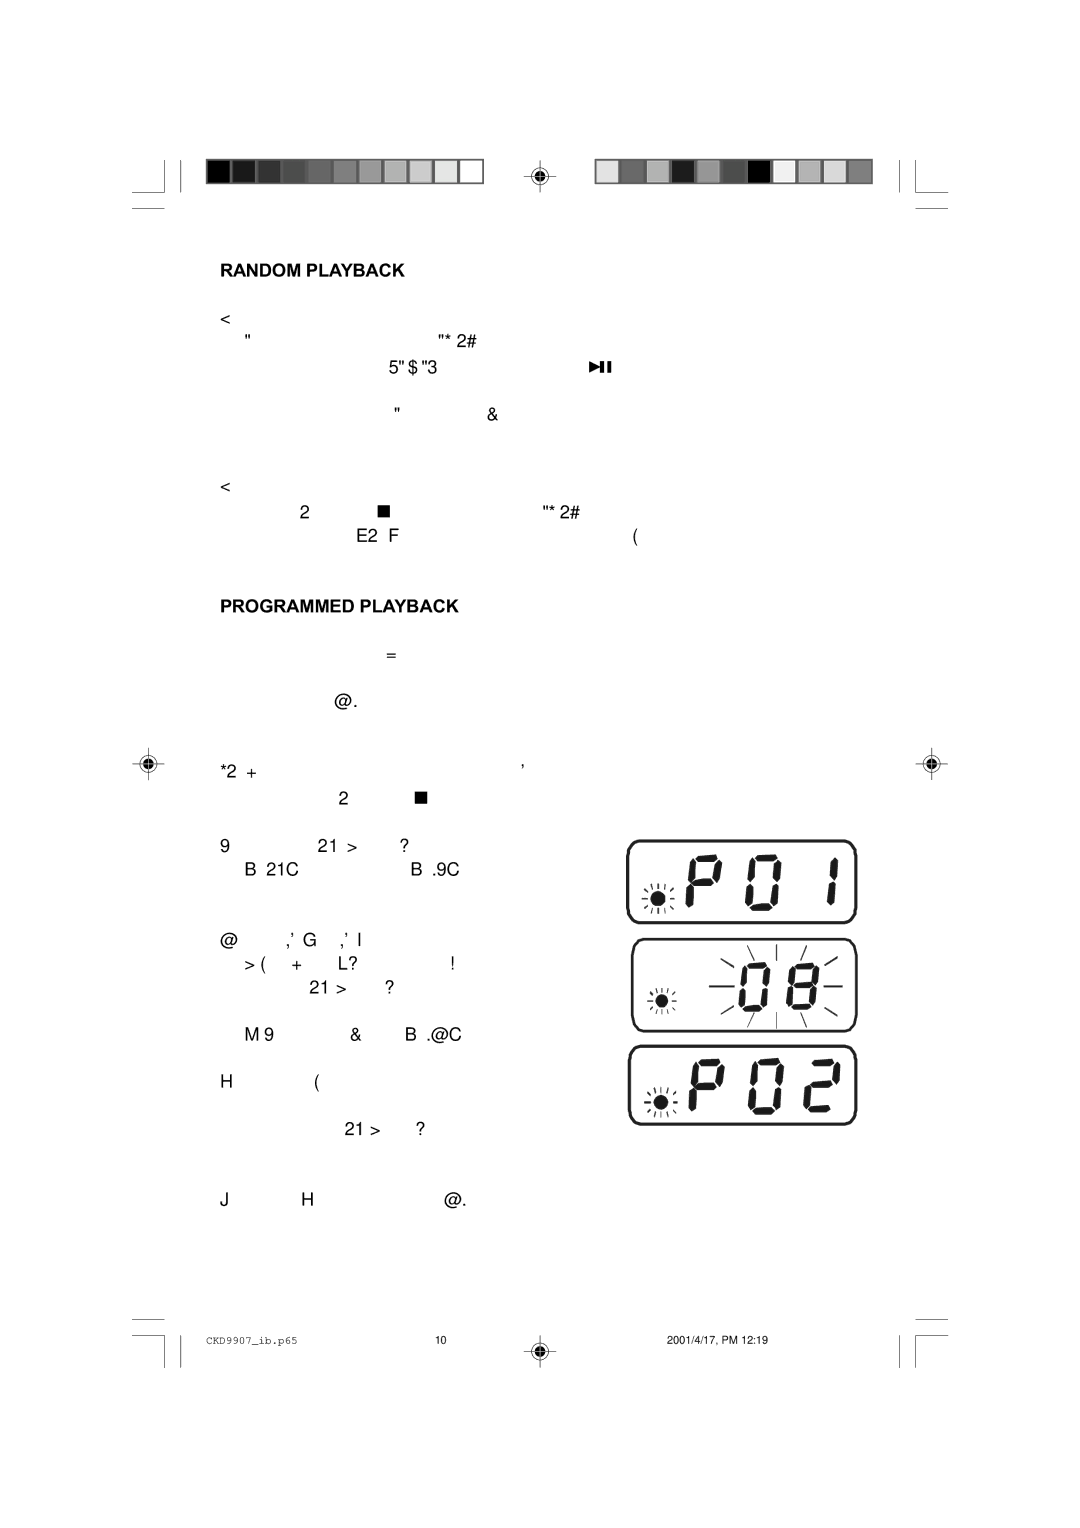 Emerson CKD9907 manual Random Playback, Programmed Playback 